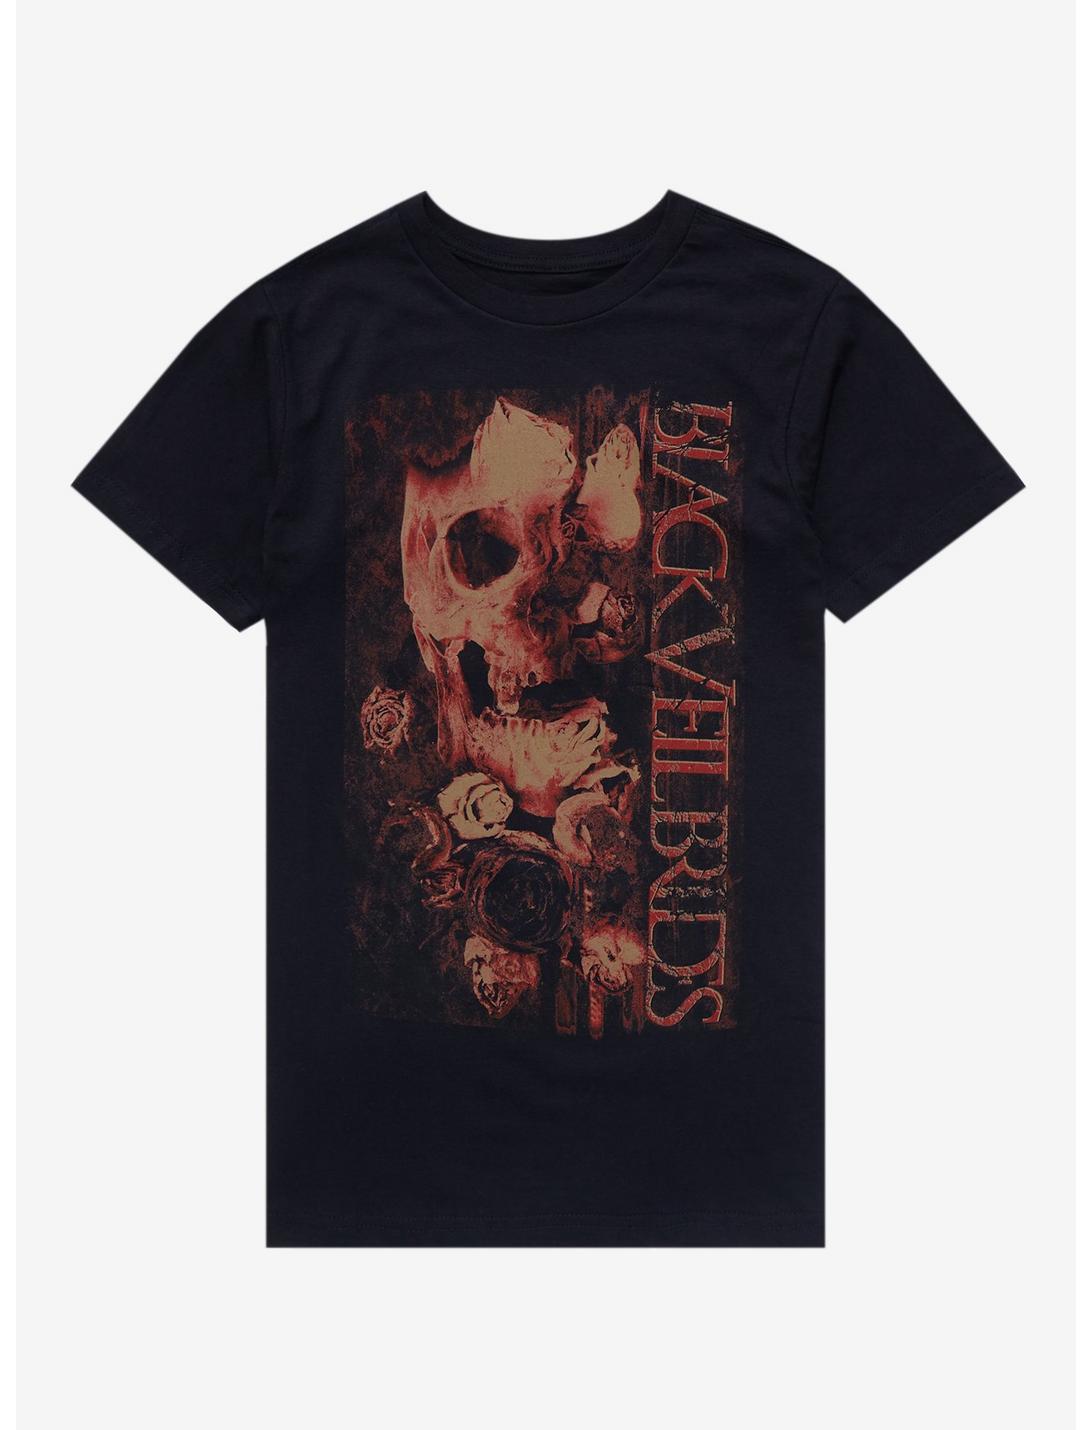 Black Veil Brides Skulls & Roses Boyfriend Fit Girls T-Shirt, BLACK, hi-res